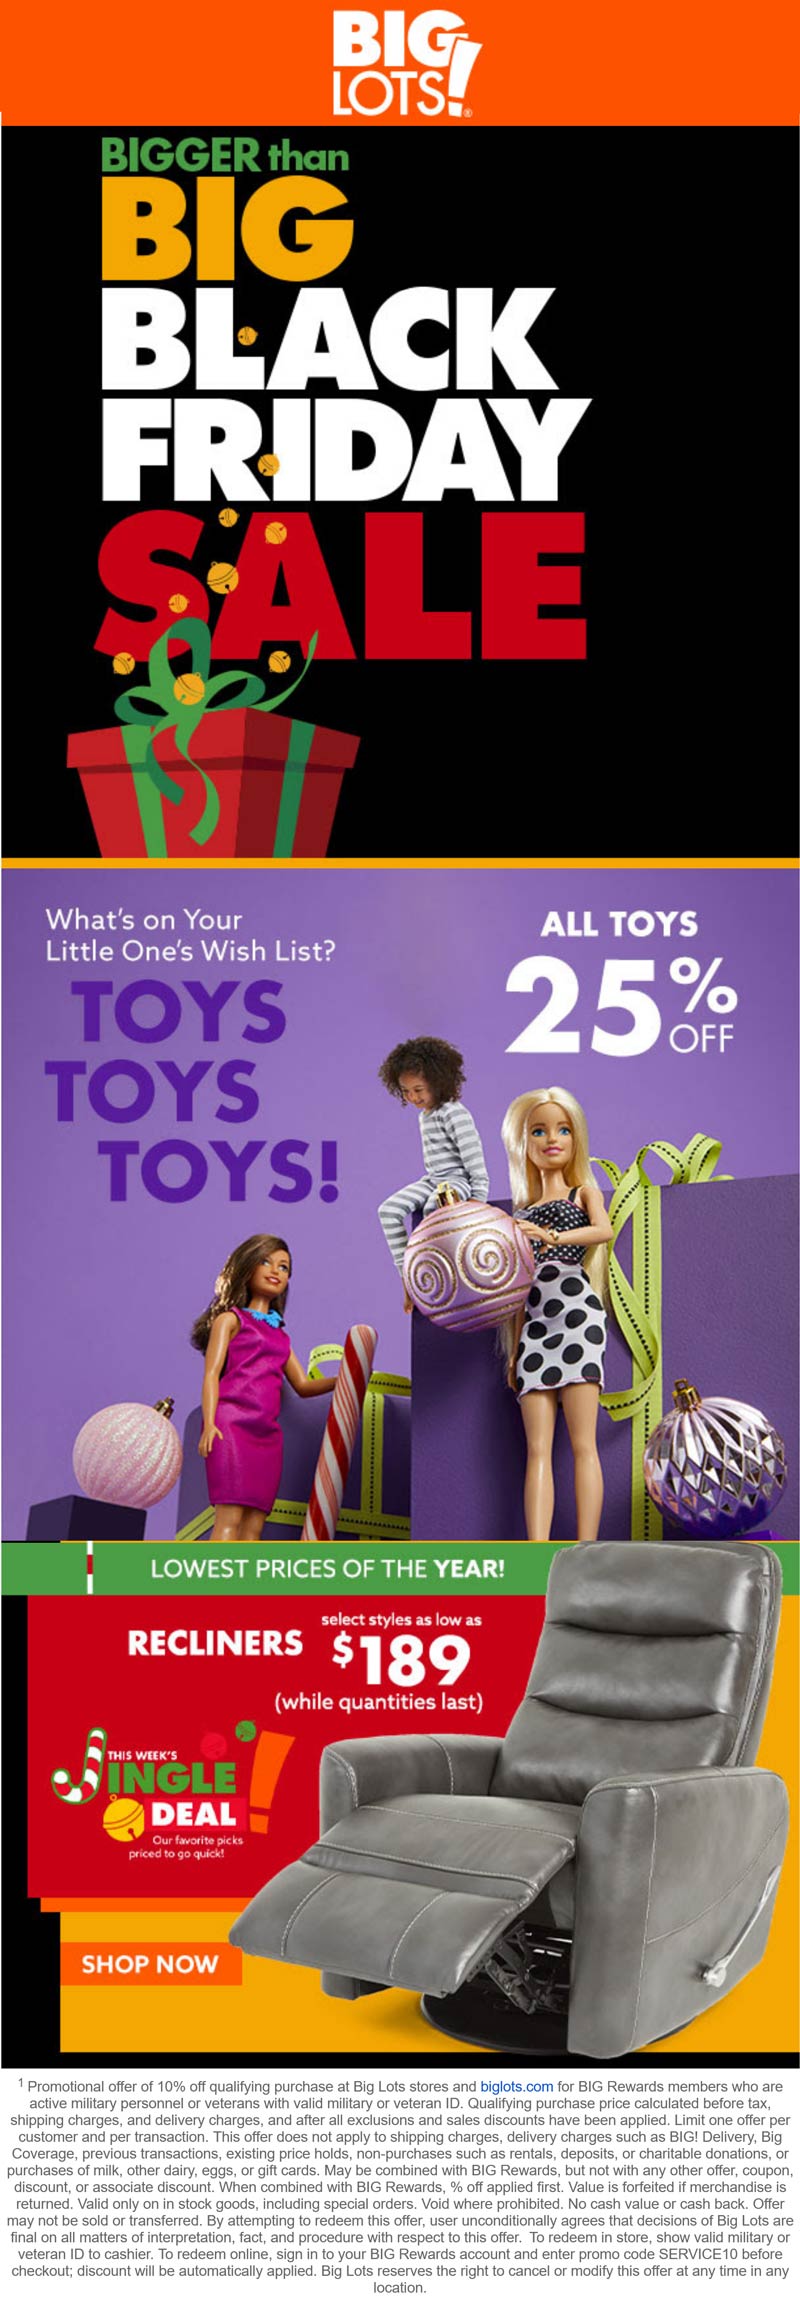 Big Lots stores Coupon  All toys 25% off at Big Lots #biglots 